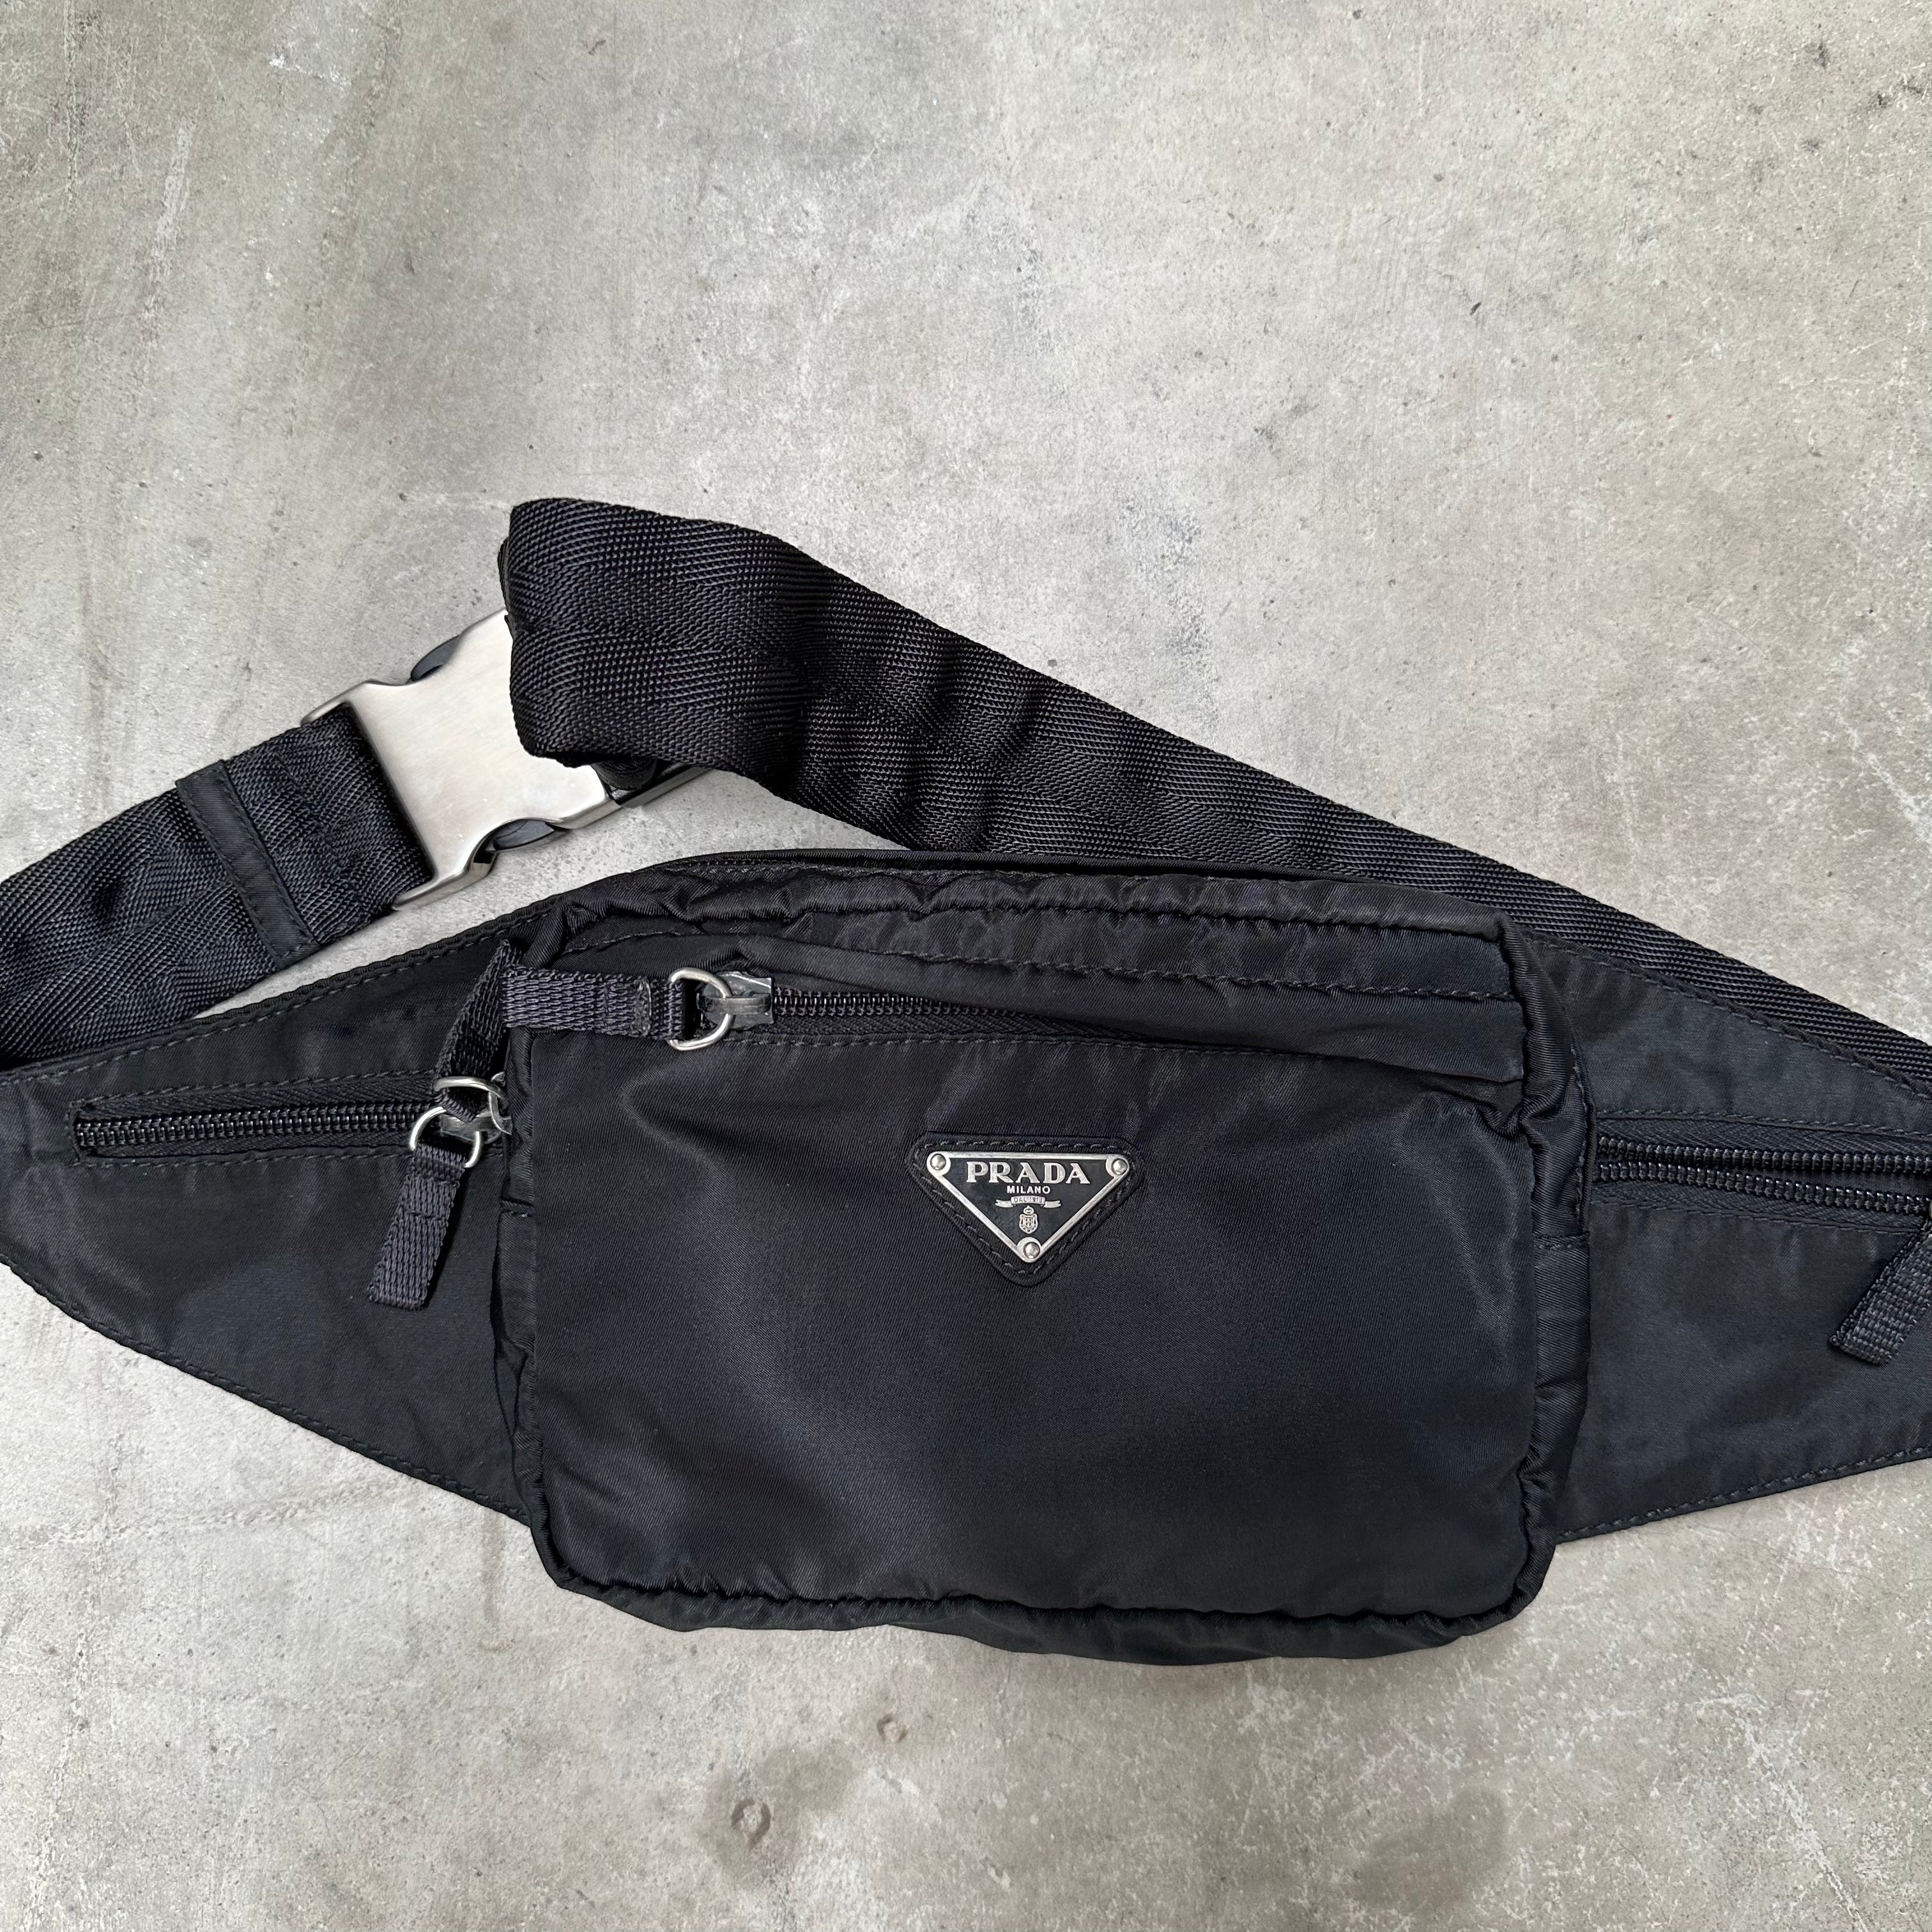 Prada Bum/Belt Nylon Black Bag